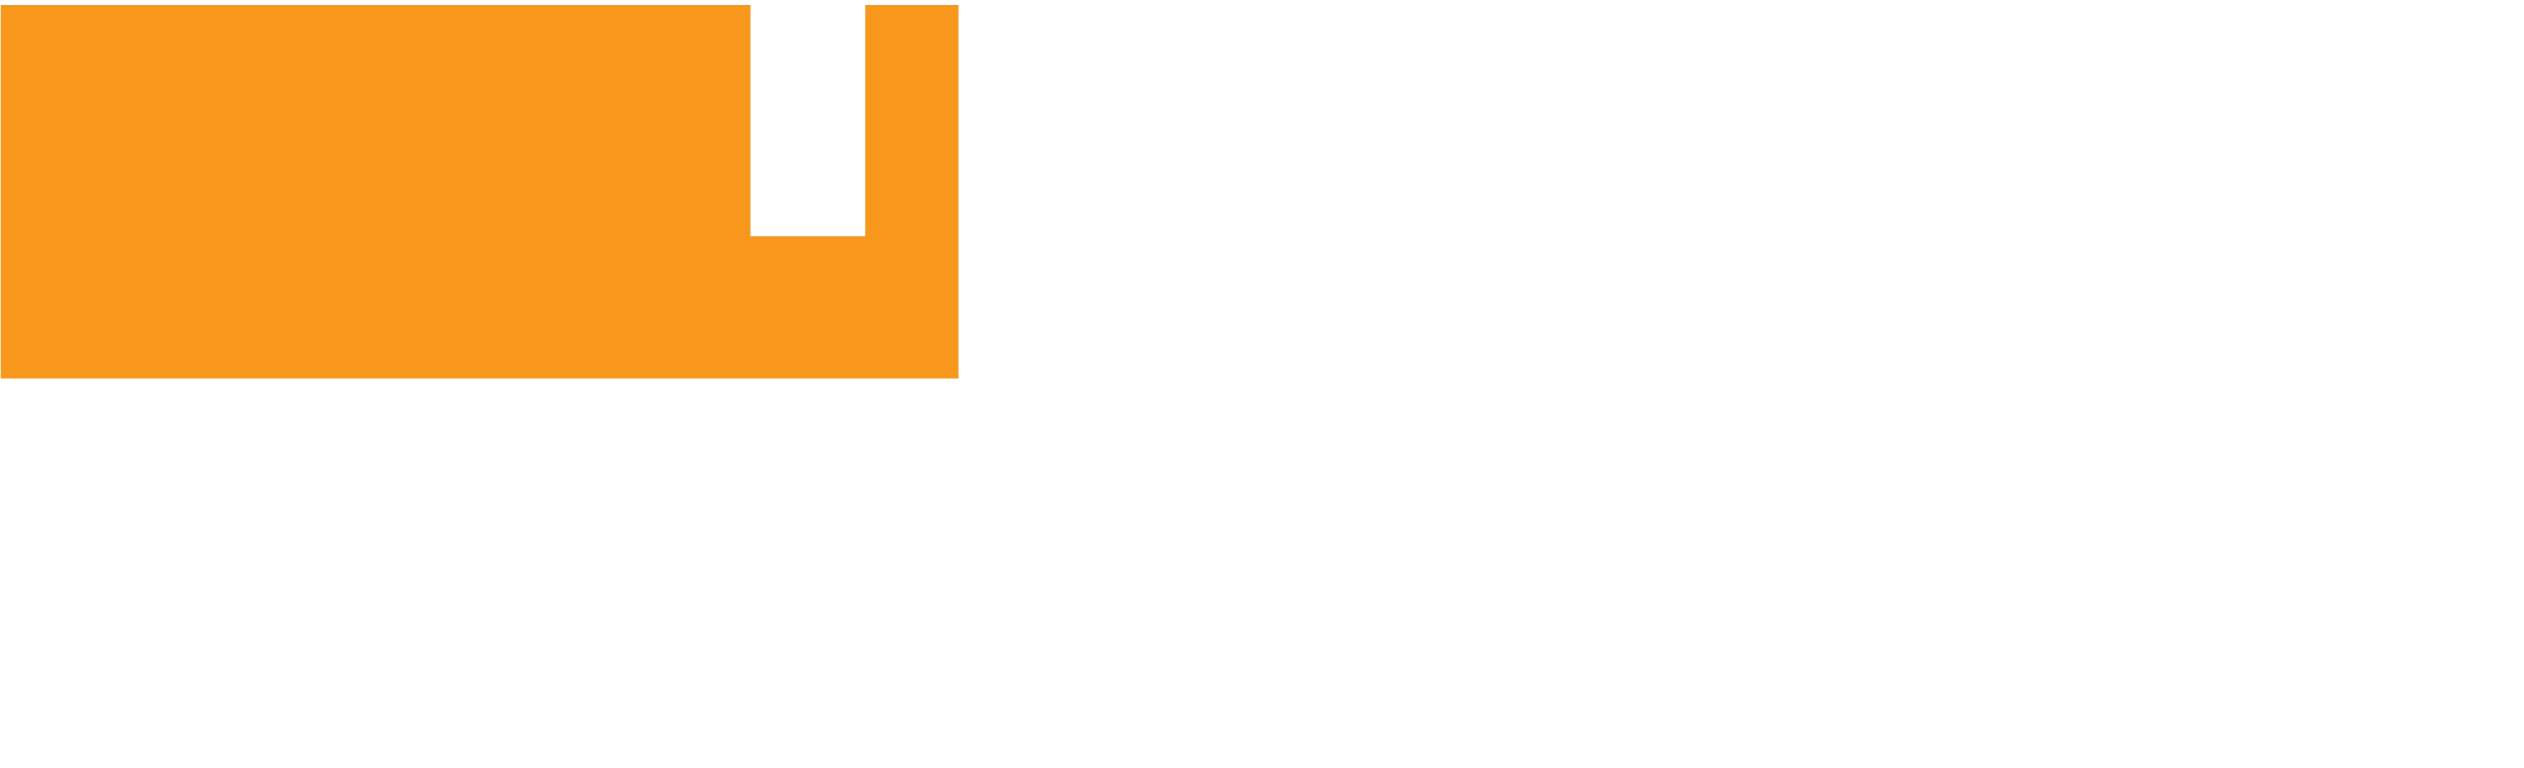 Platform And Pipeline Business Models (2524x768)